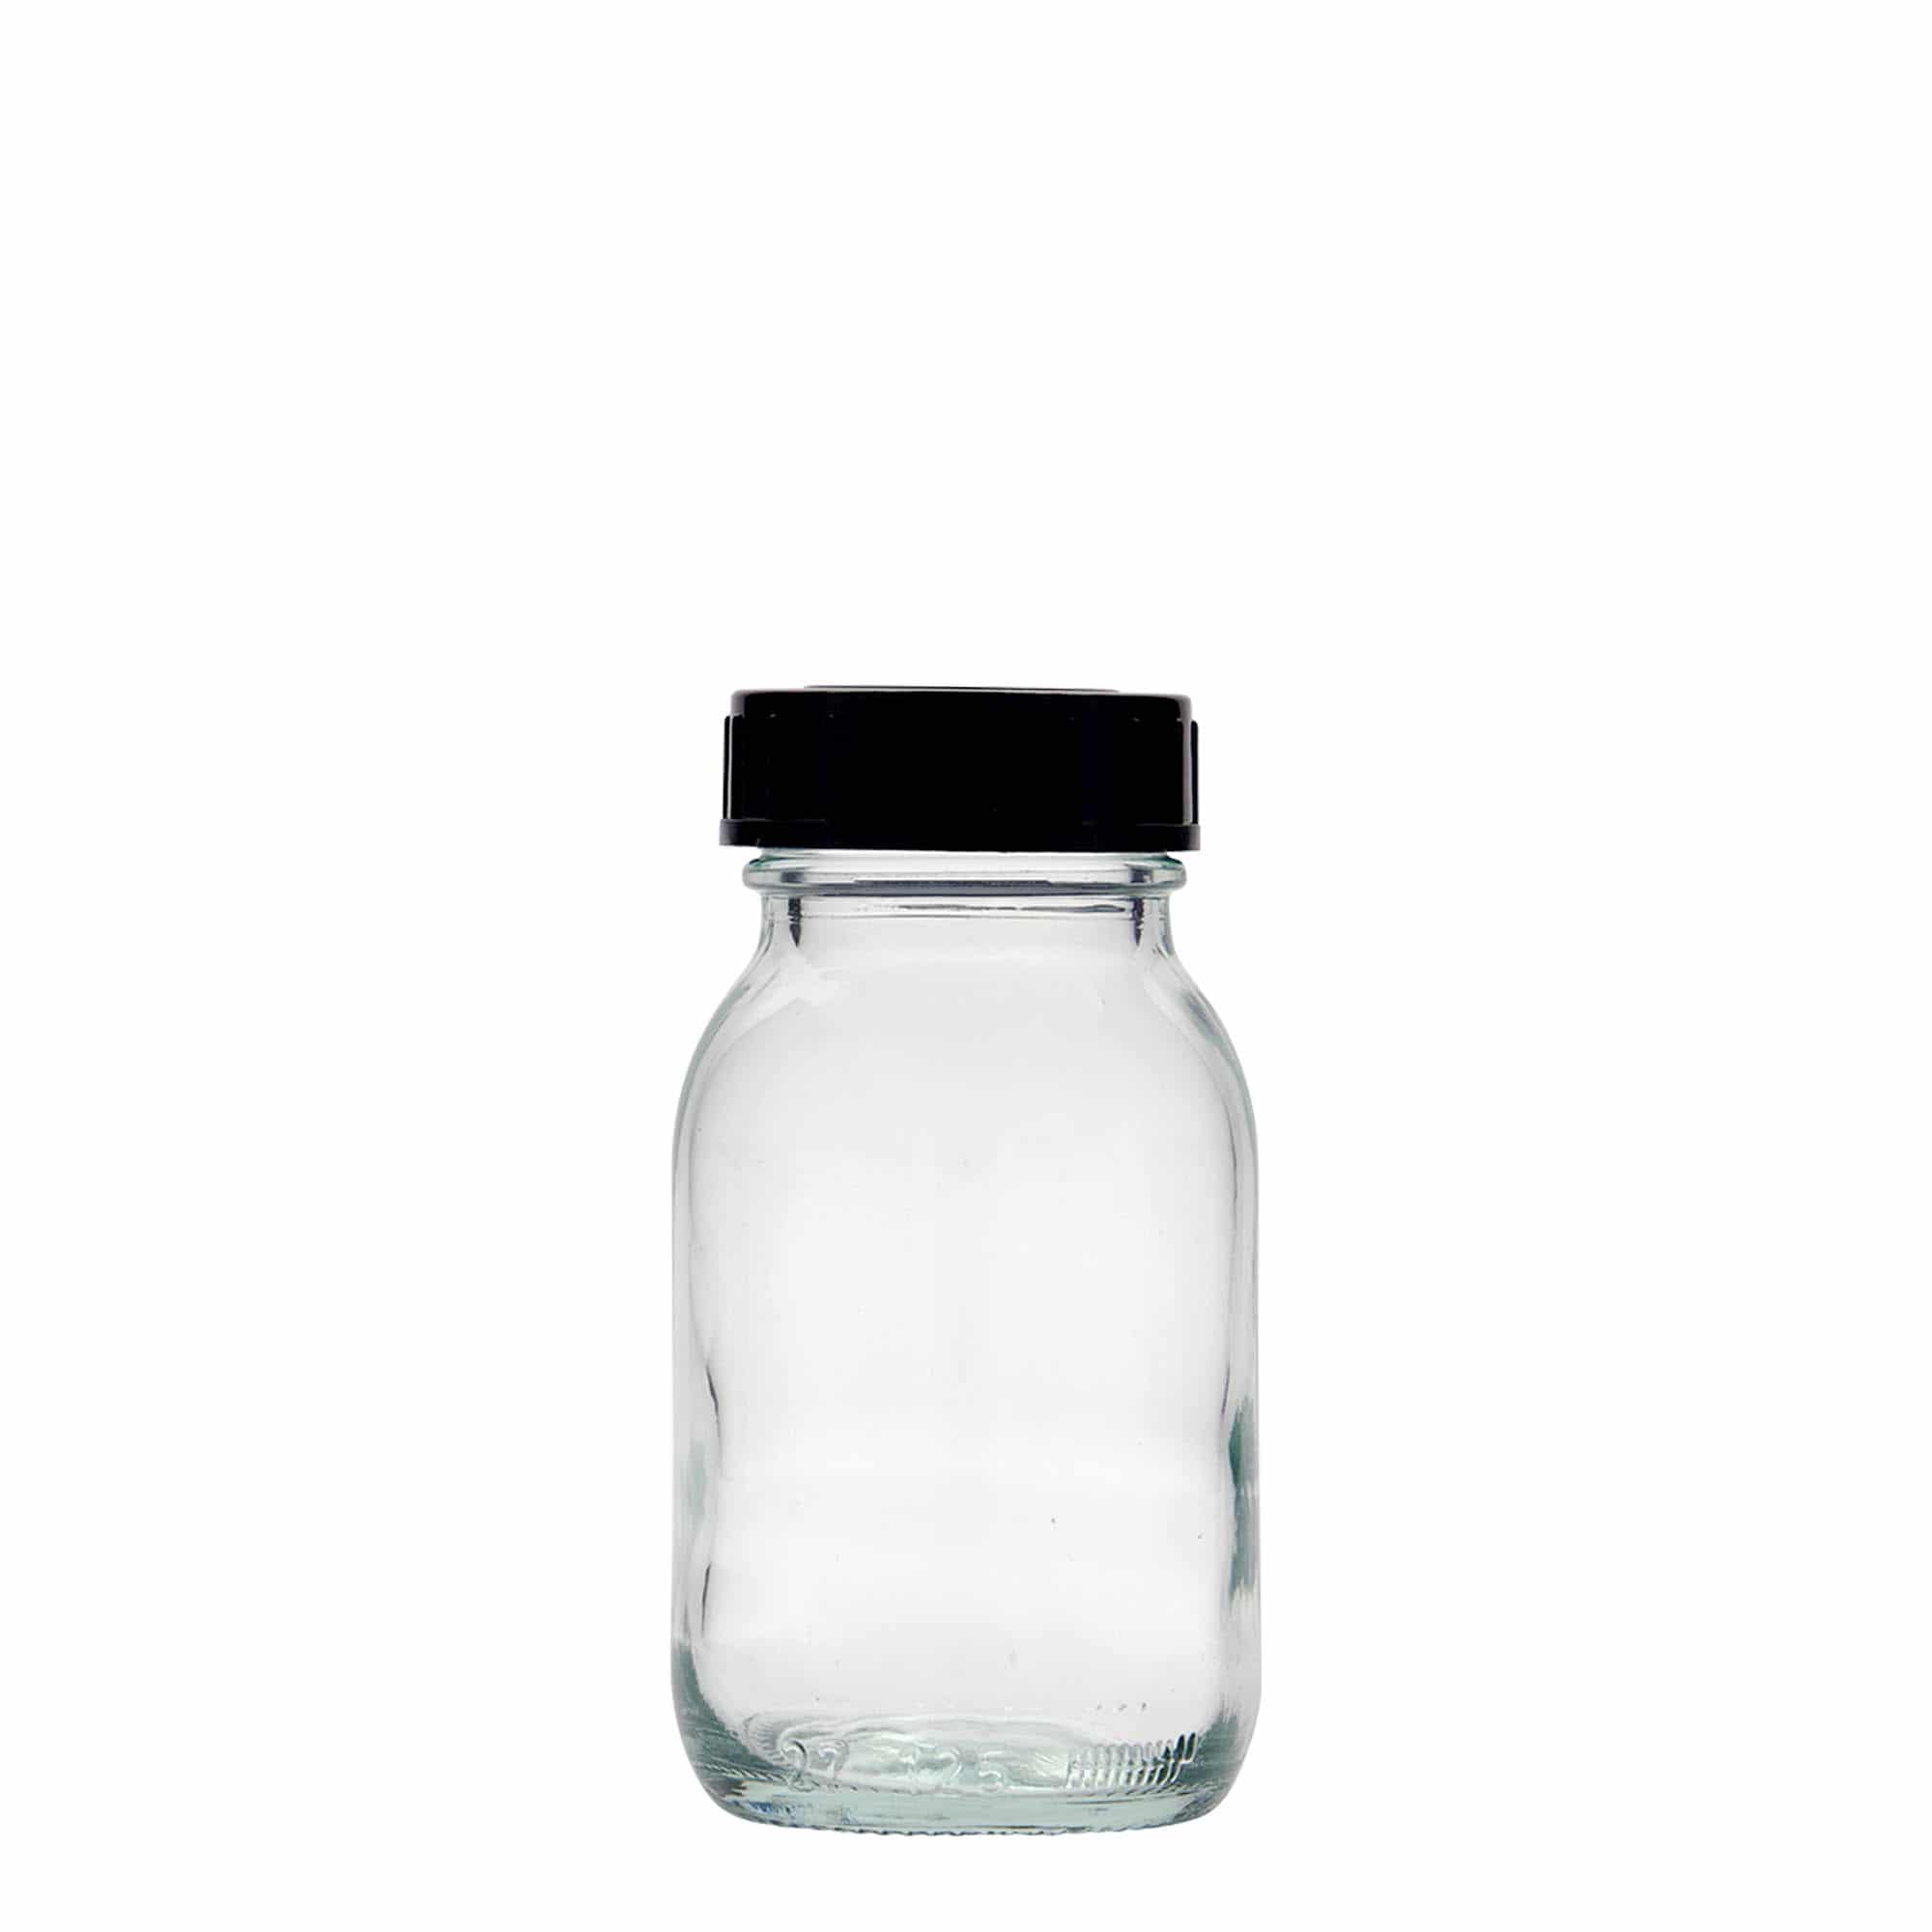 125 ml wide mouth jar, closure: DIN 40